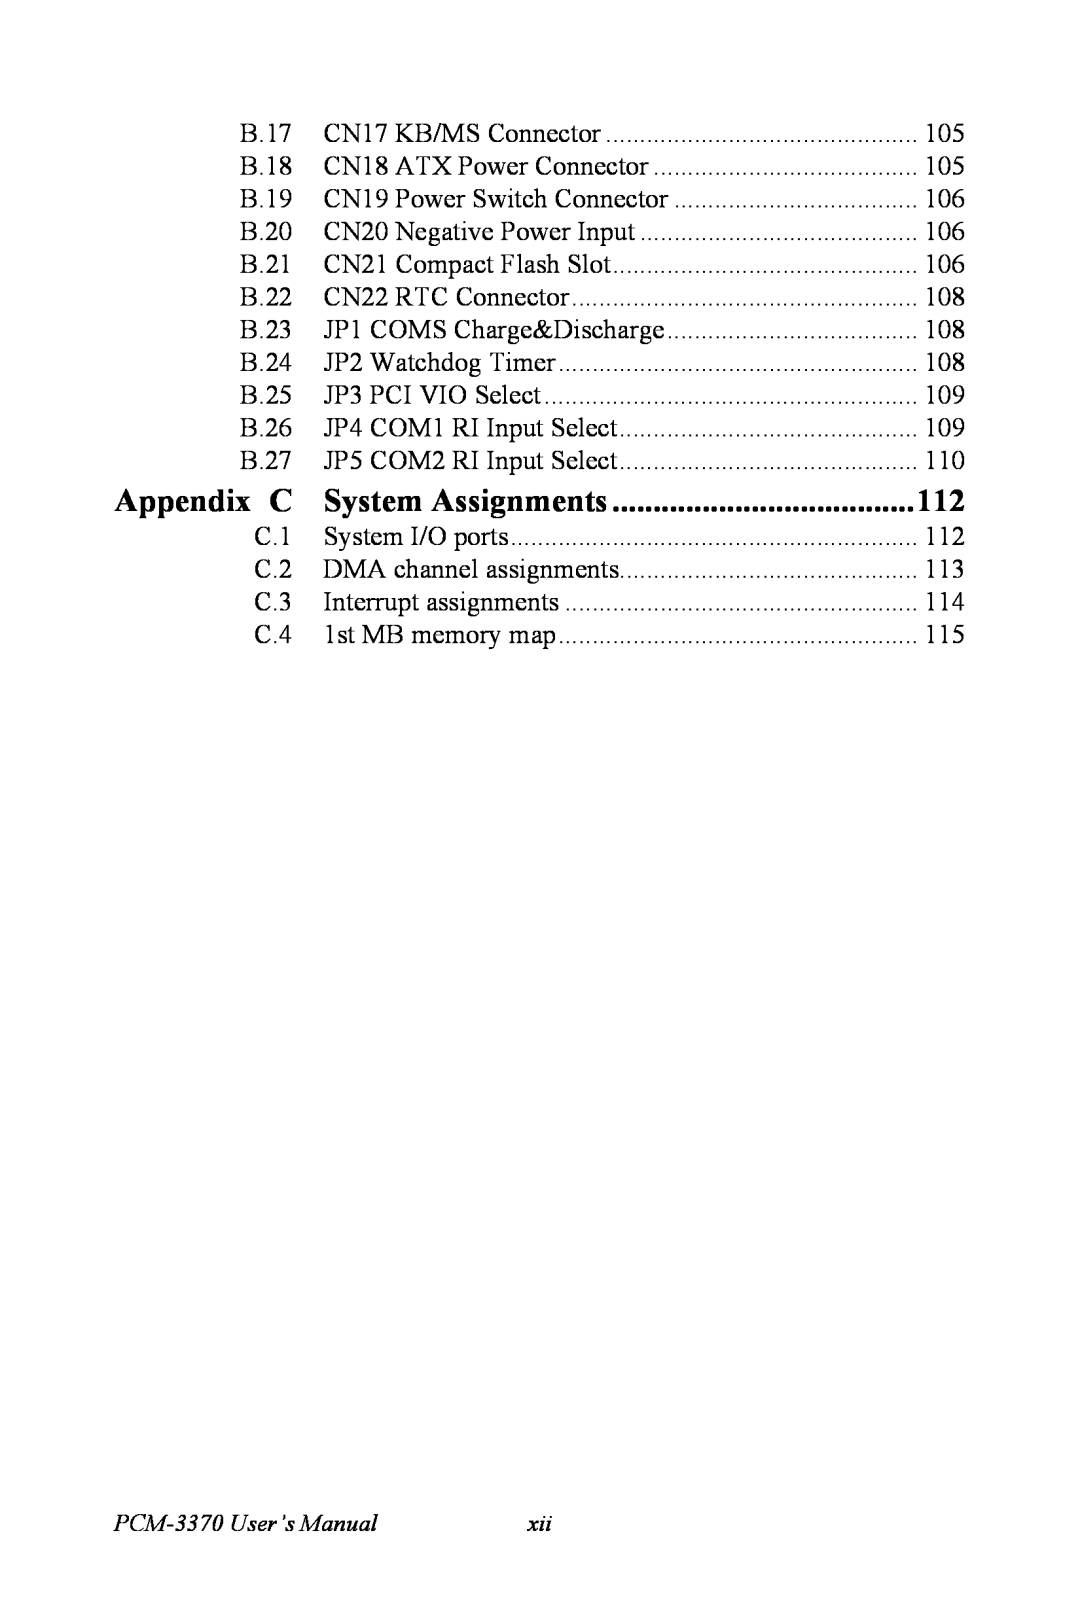 Intel PCM-3370 user manual Appendix C, System Assignments 